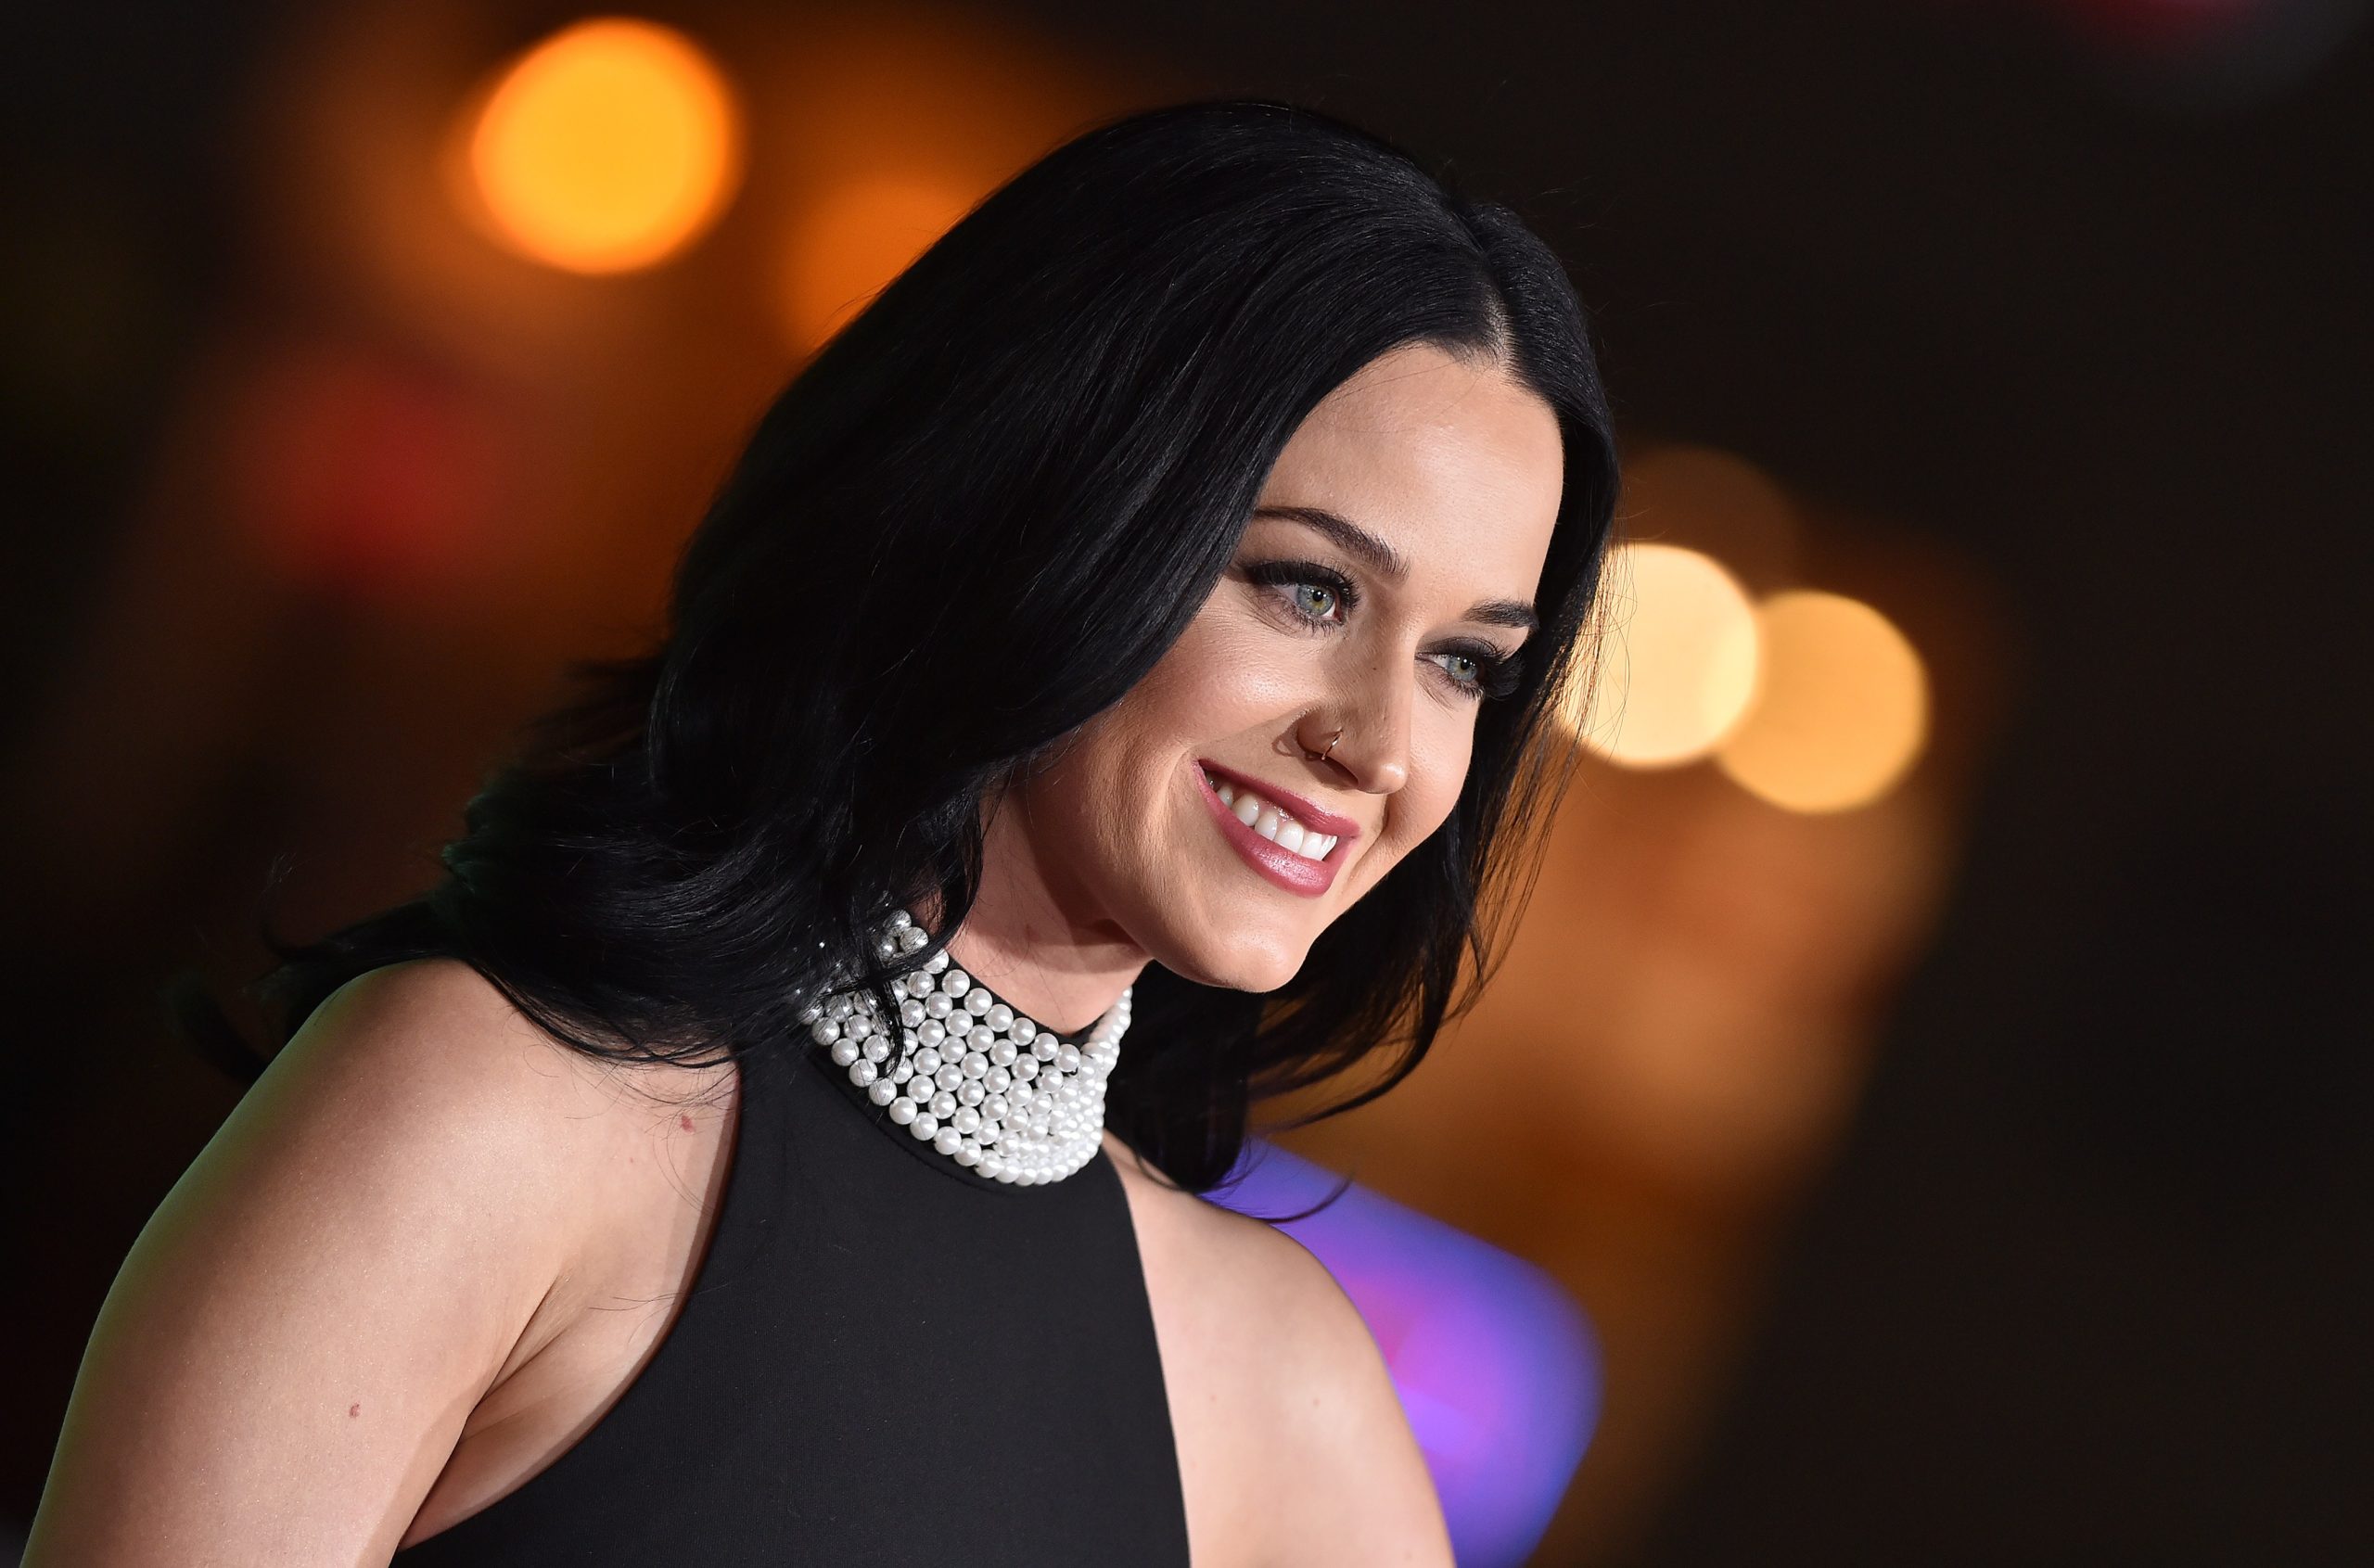 Katy Perry's divorce